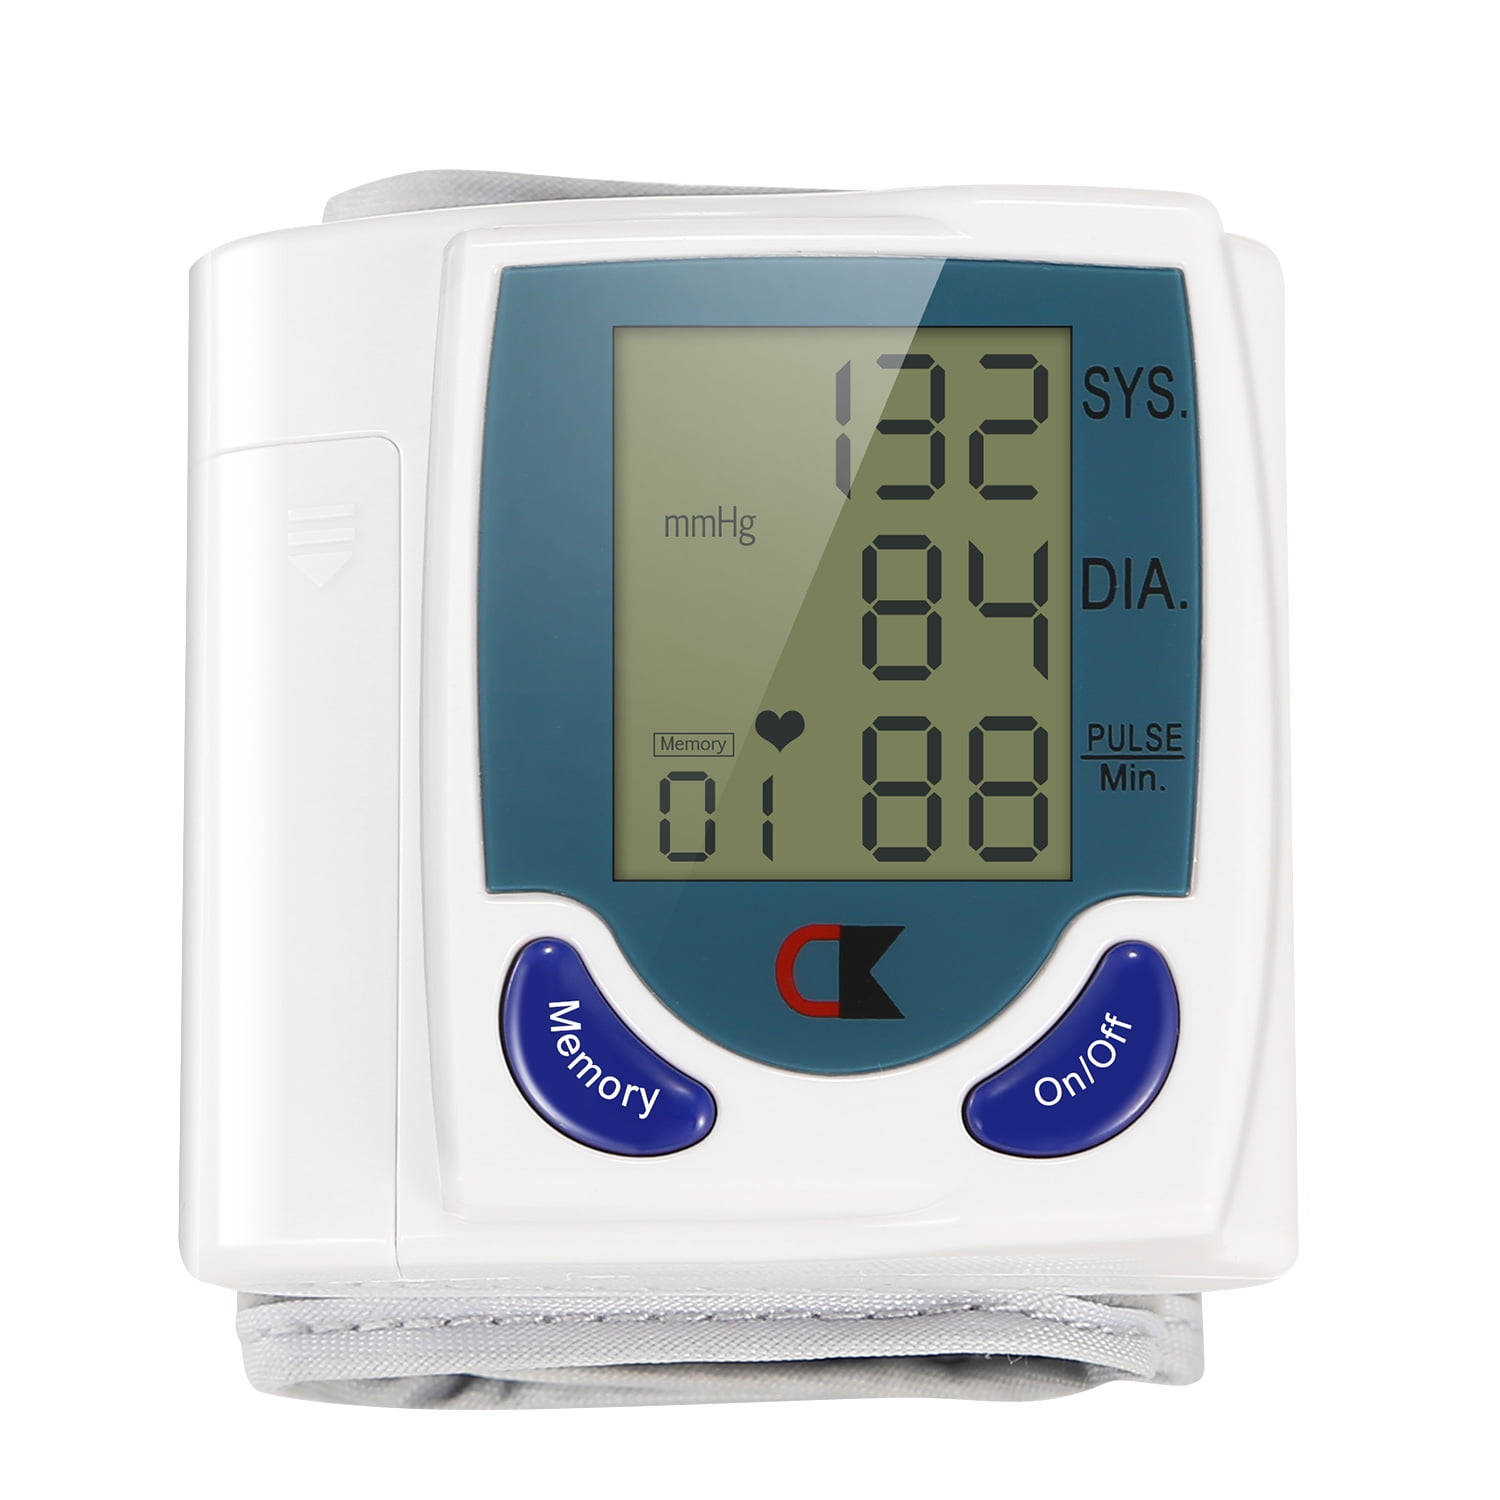 STANDARD Wrist Digital Blood Pressure Monitoring Machine - (Digital  measuring device meter easy to operate automatic machine at home)* Bp  Monitor - STANDARD 